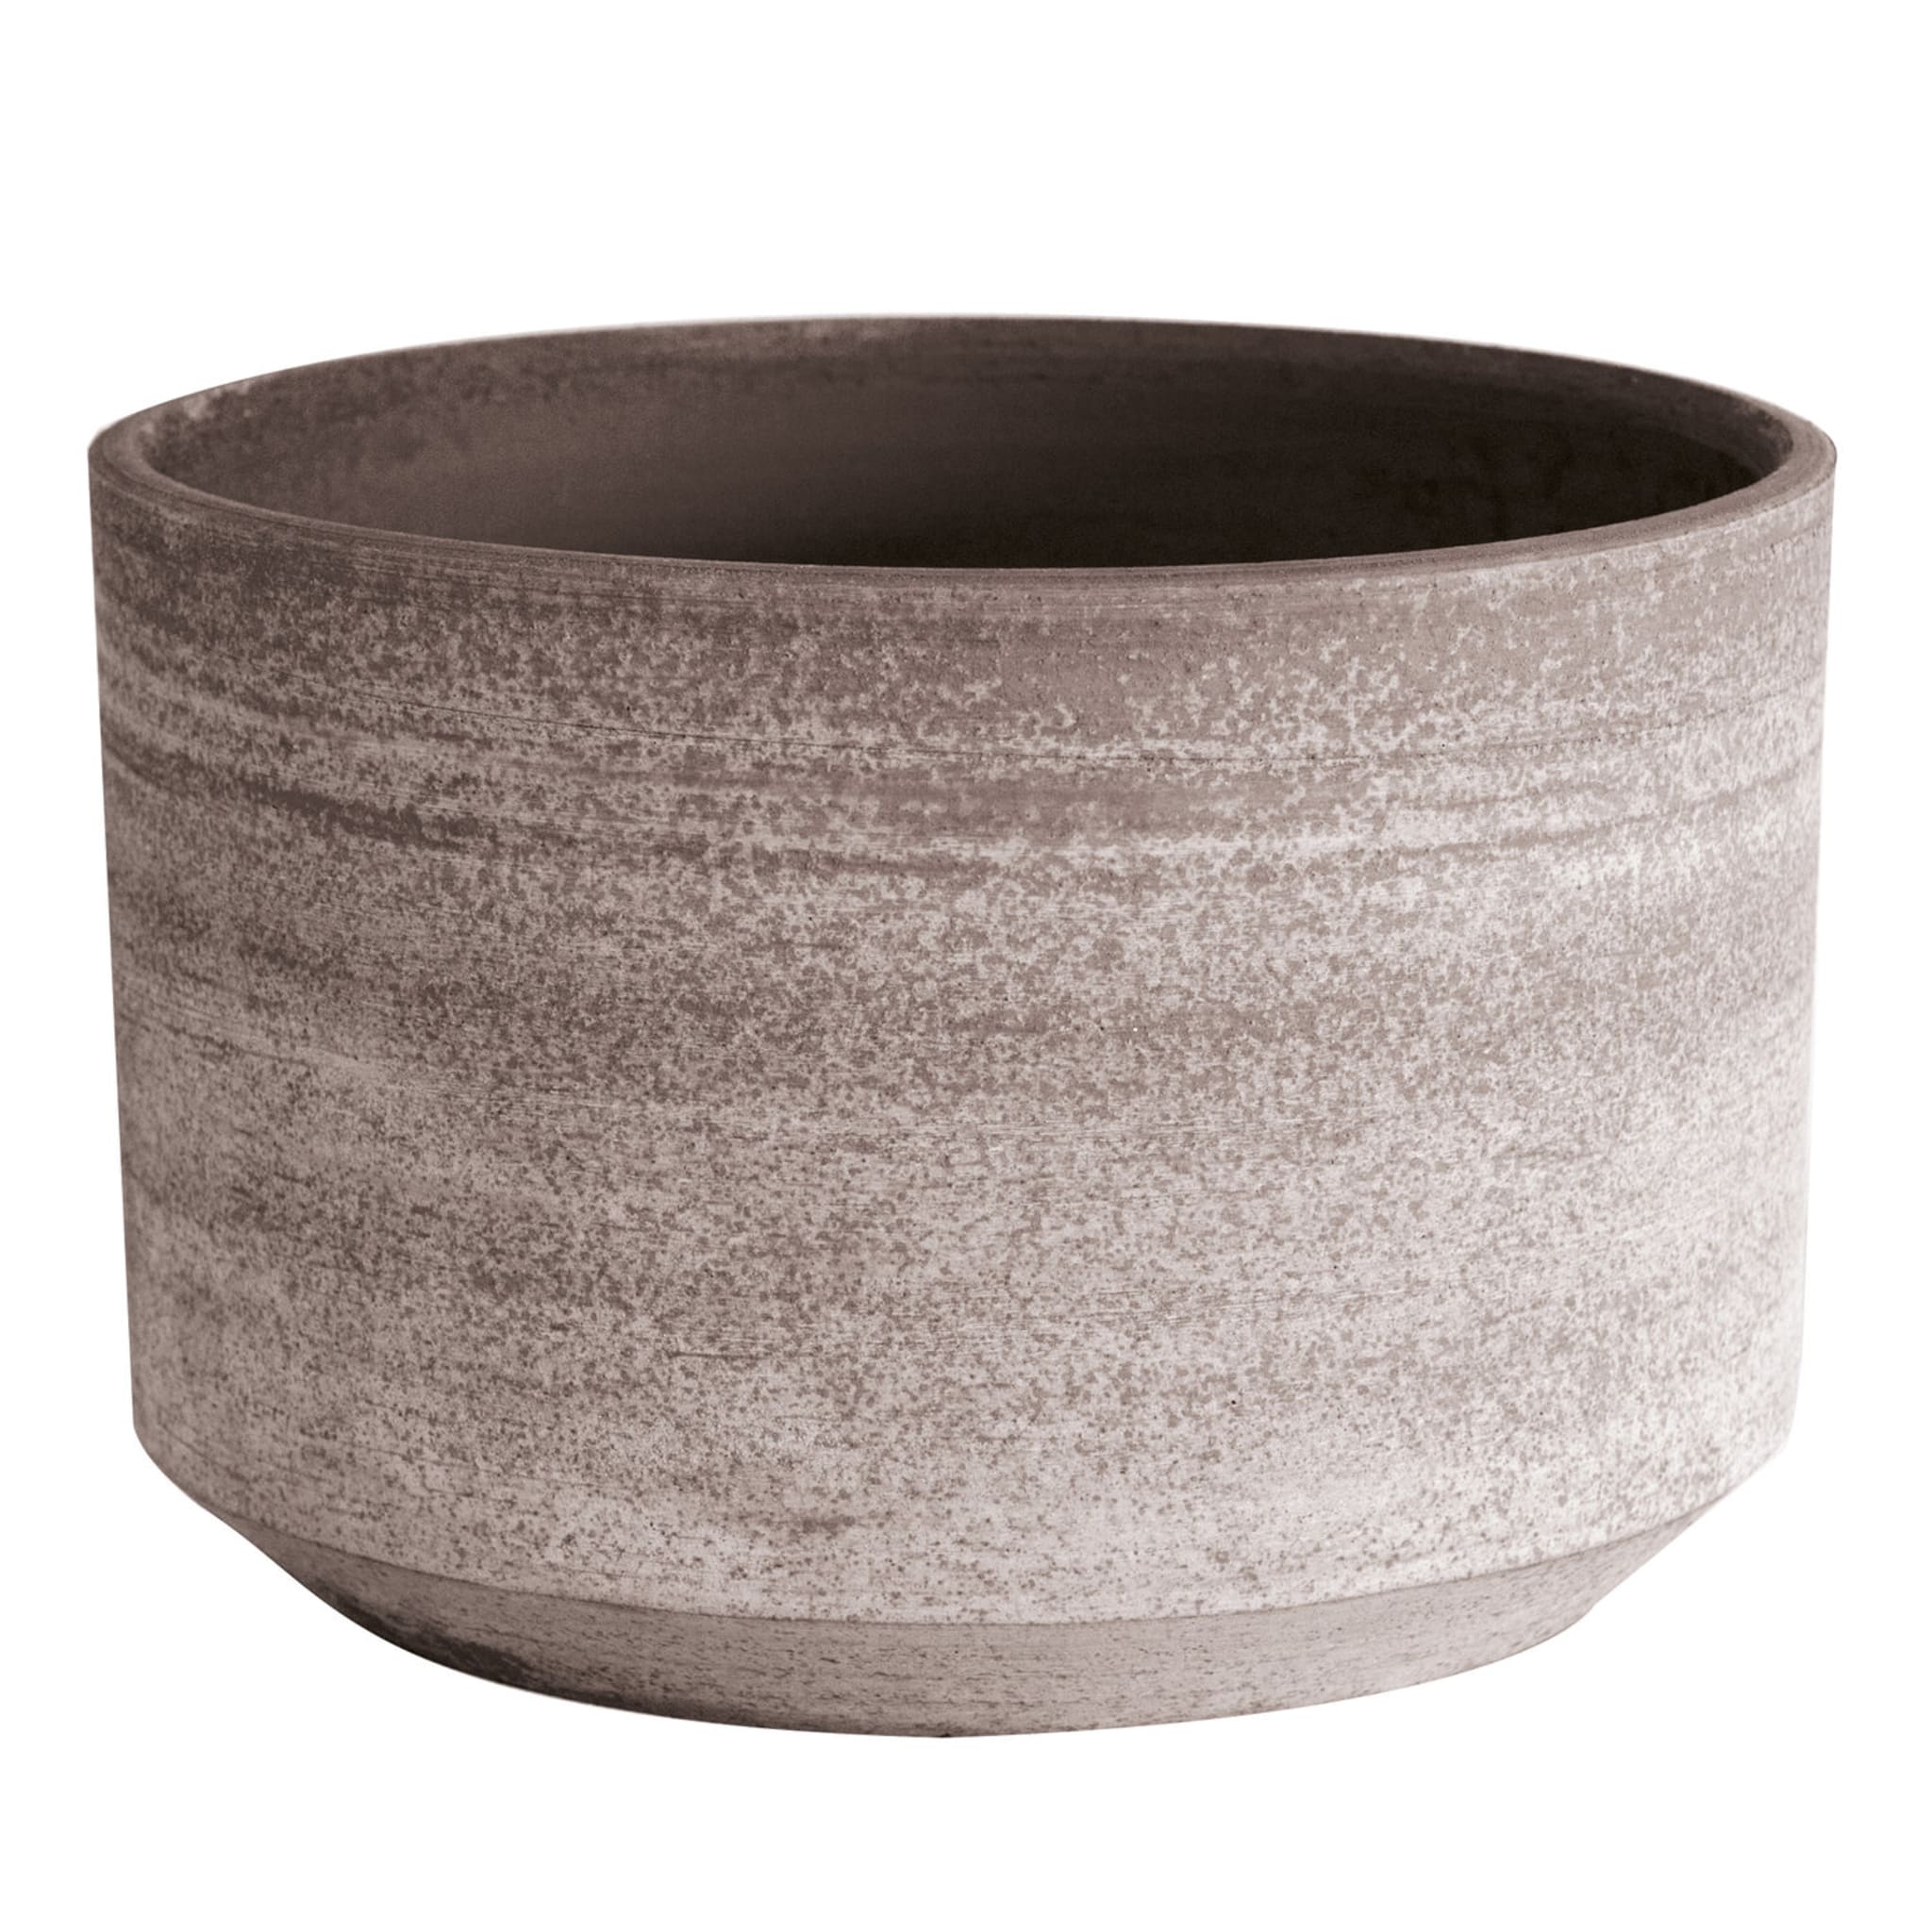 Terrae Black Cylinder Vase - Main view